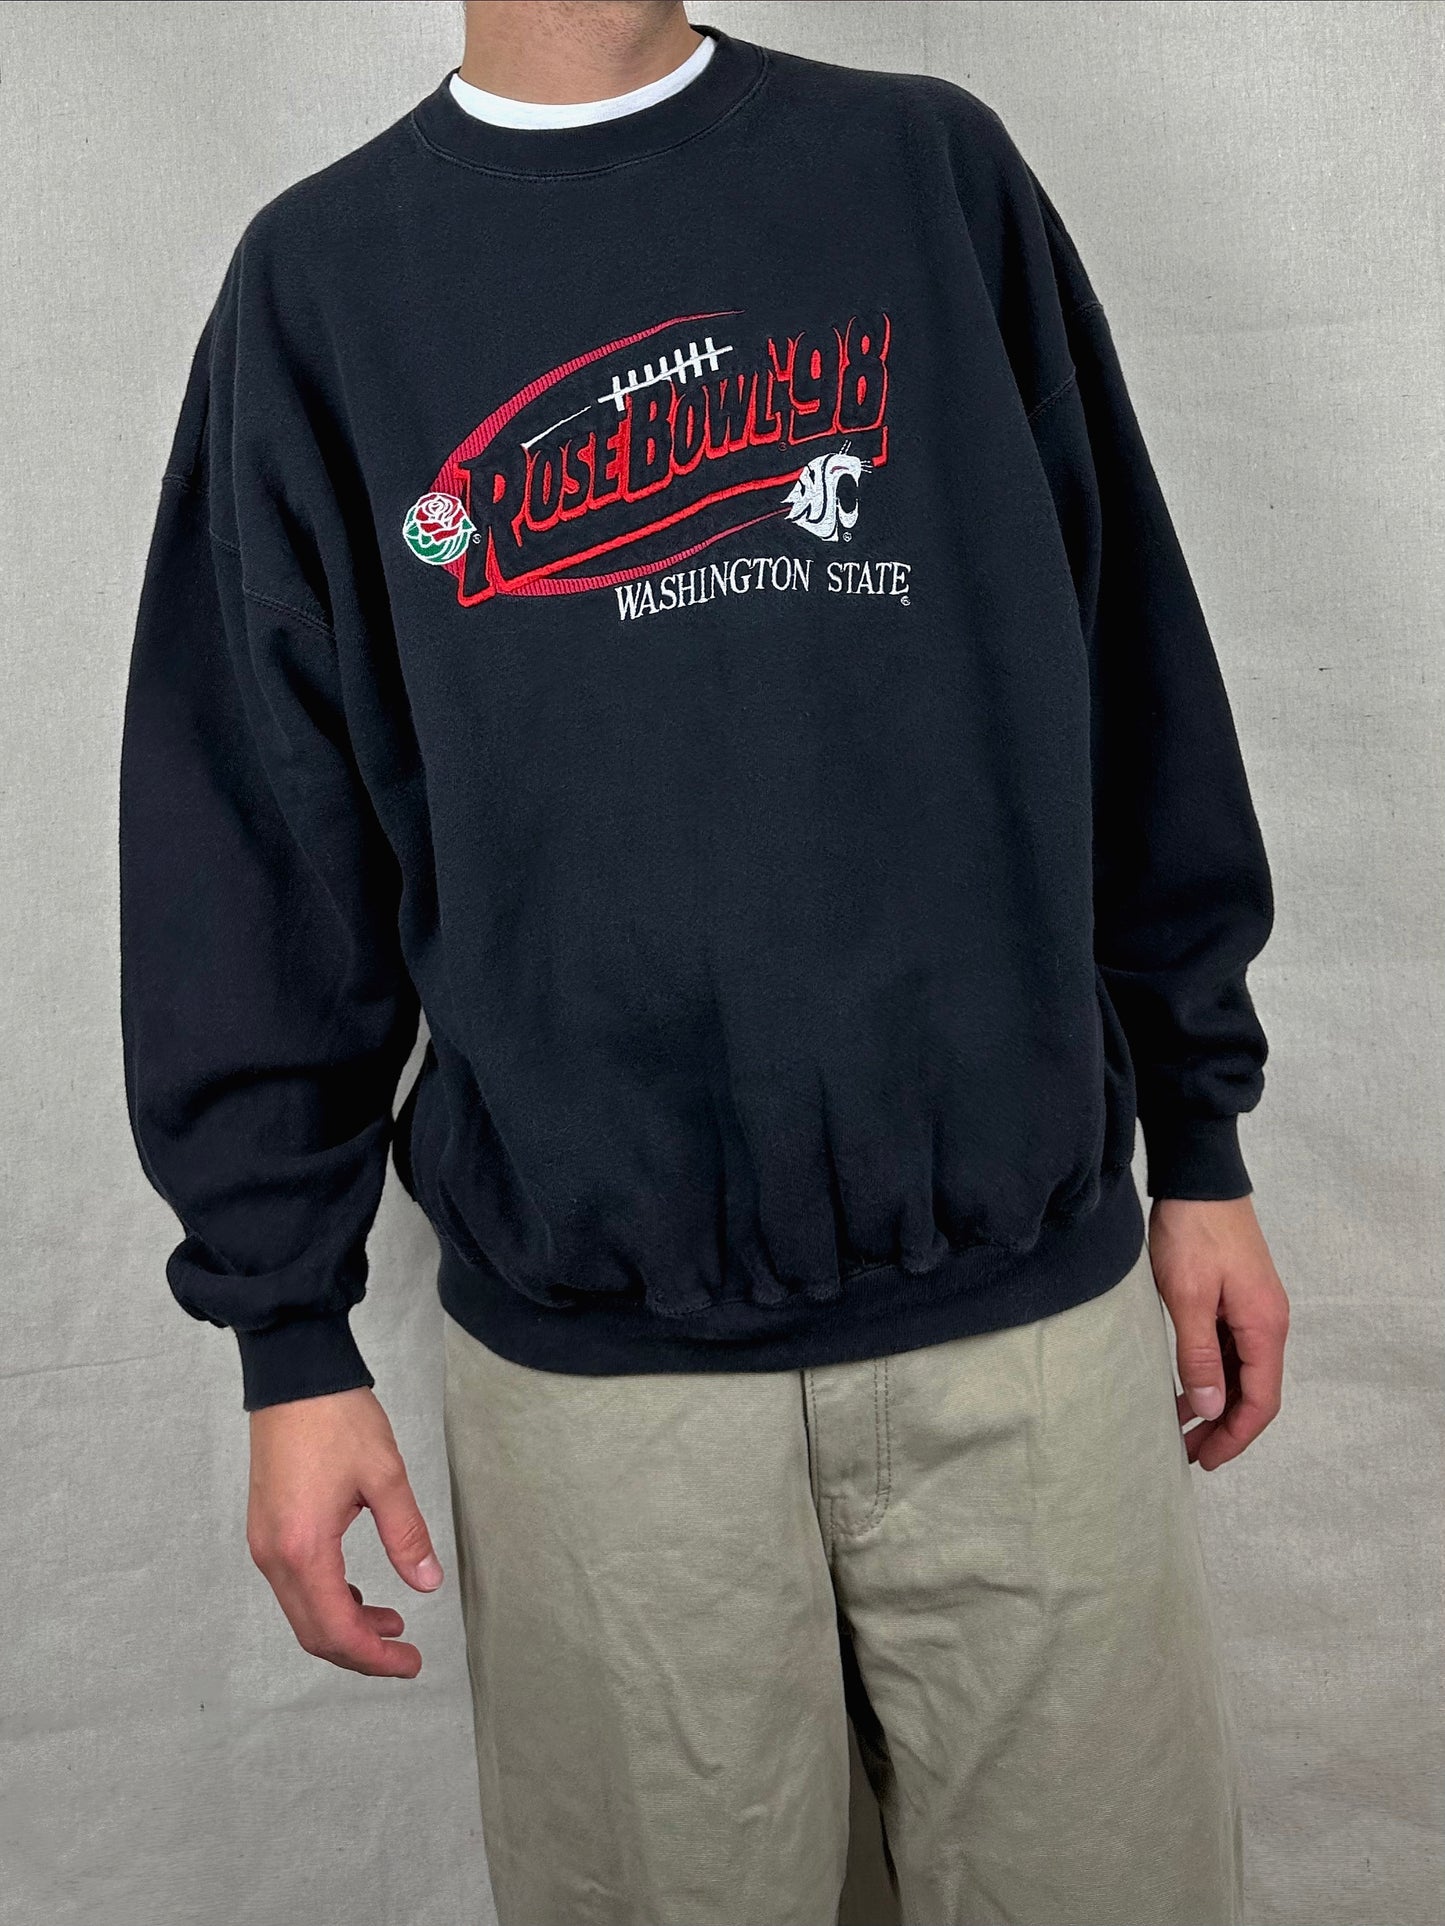 1998 Washington State Cougars Heavyweight Embroidered Vintage Sweatshirt Size L-XL